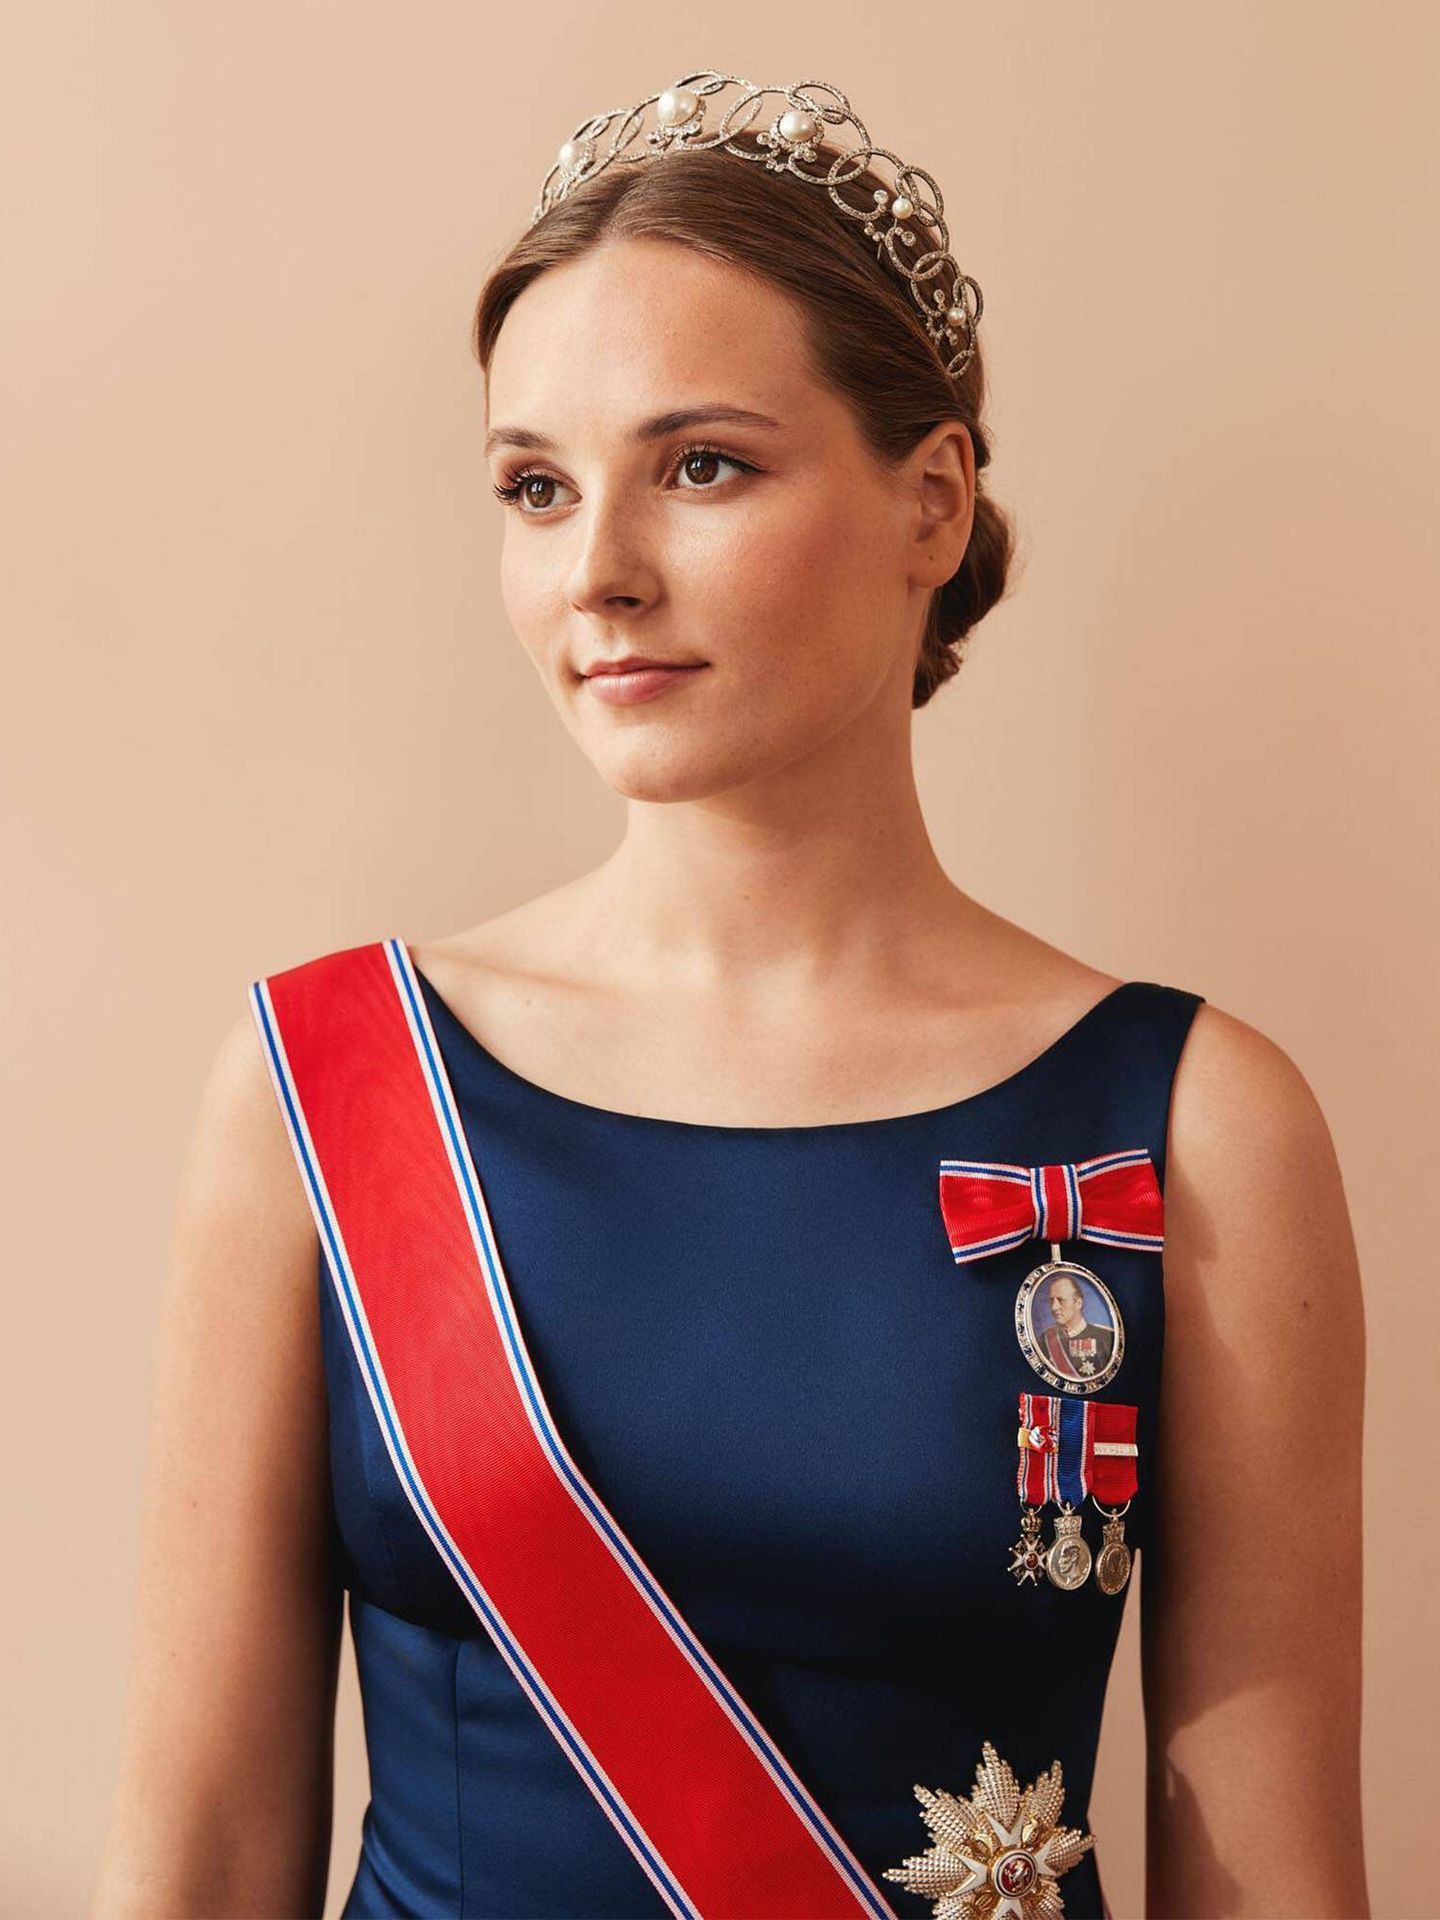 Retratos oficiales de la princesa Ingrid Alexandra de Noruega. (Casa Real de Noruega/Ida Bjørvik)